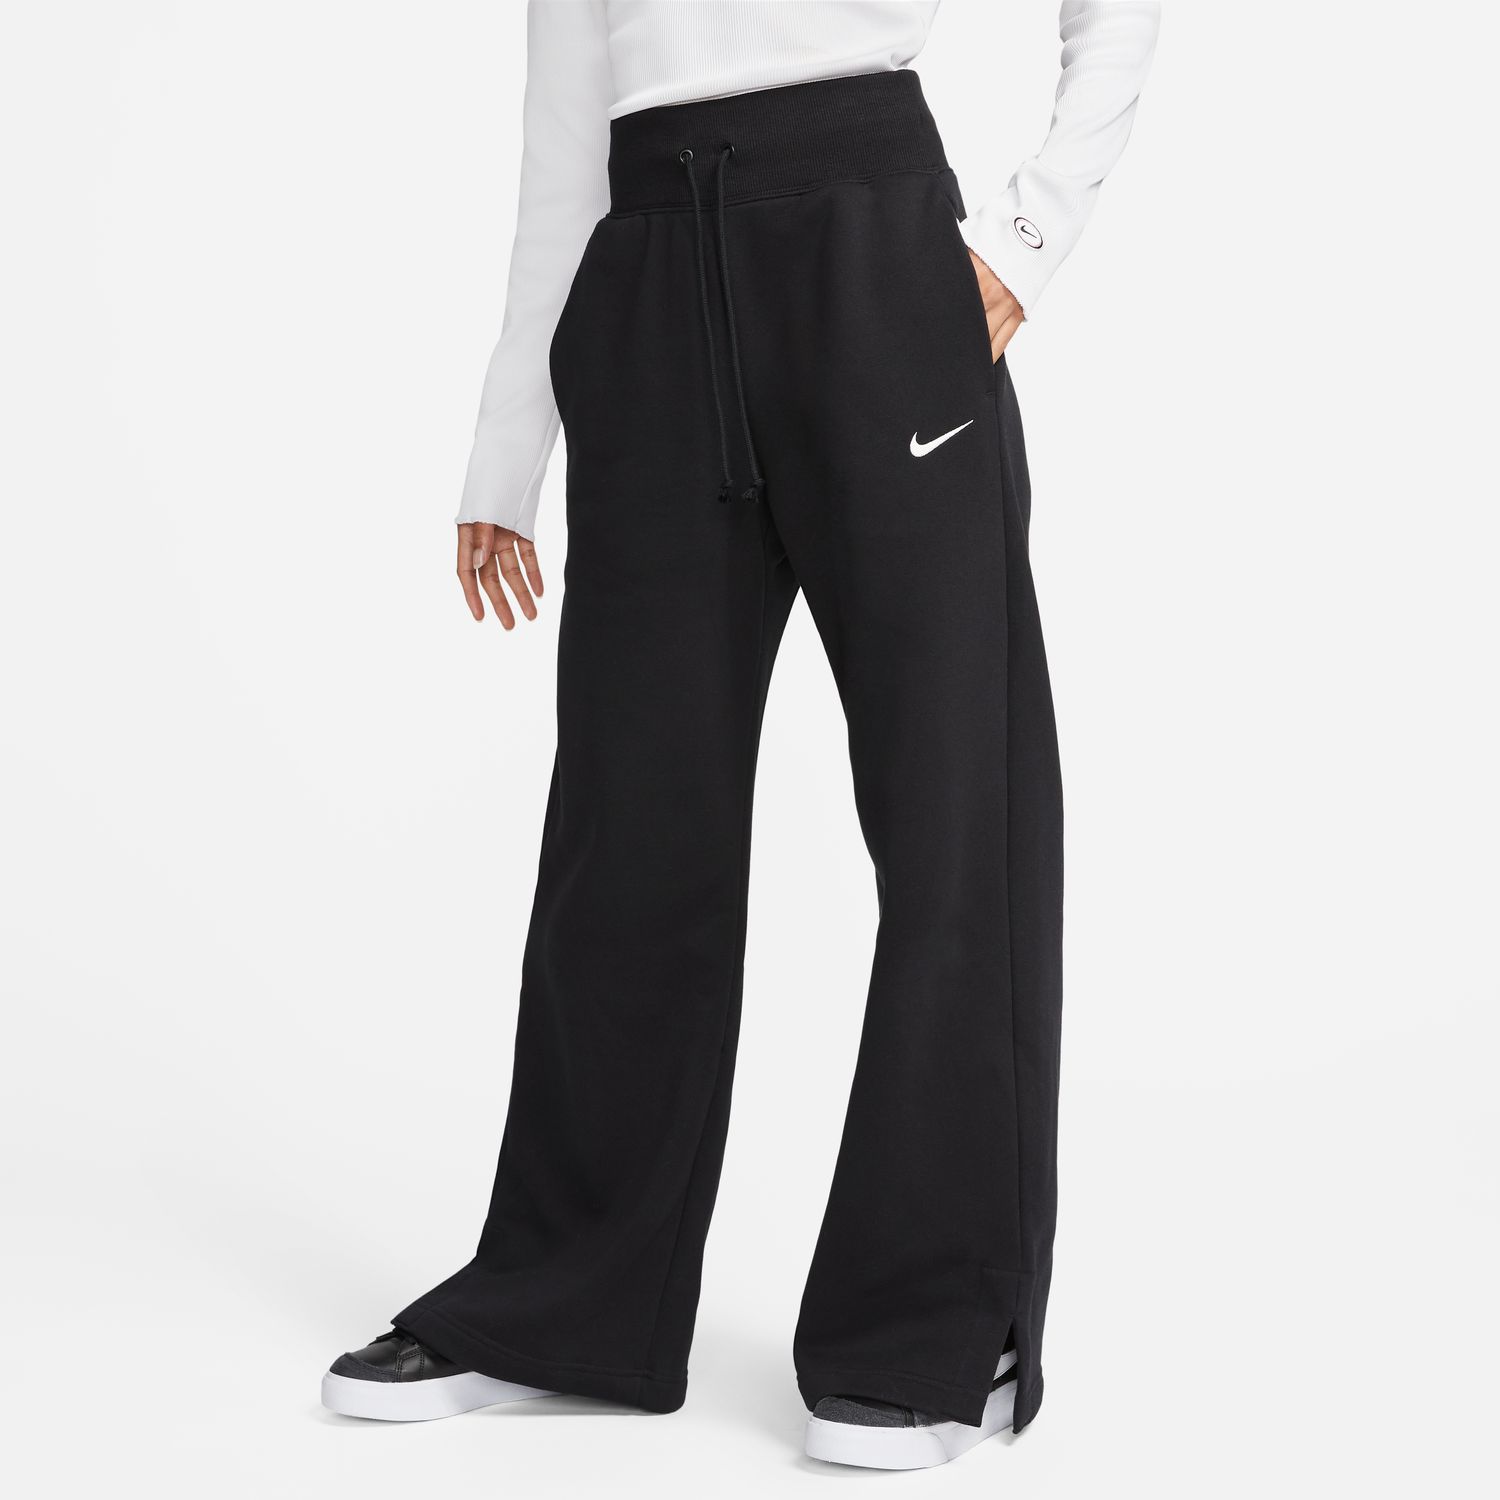 Nike Sportswear Phoenix Fleece Wmns Pants Black - Dámske - Nohavice Nike - Čierne - DQ5615-010 - Veľkosť: M